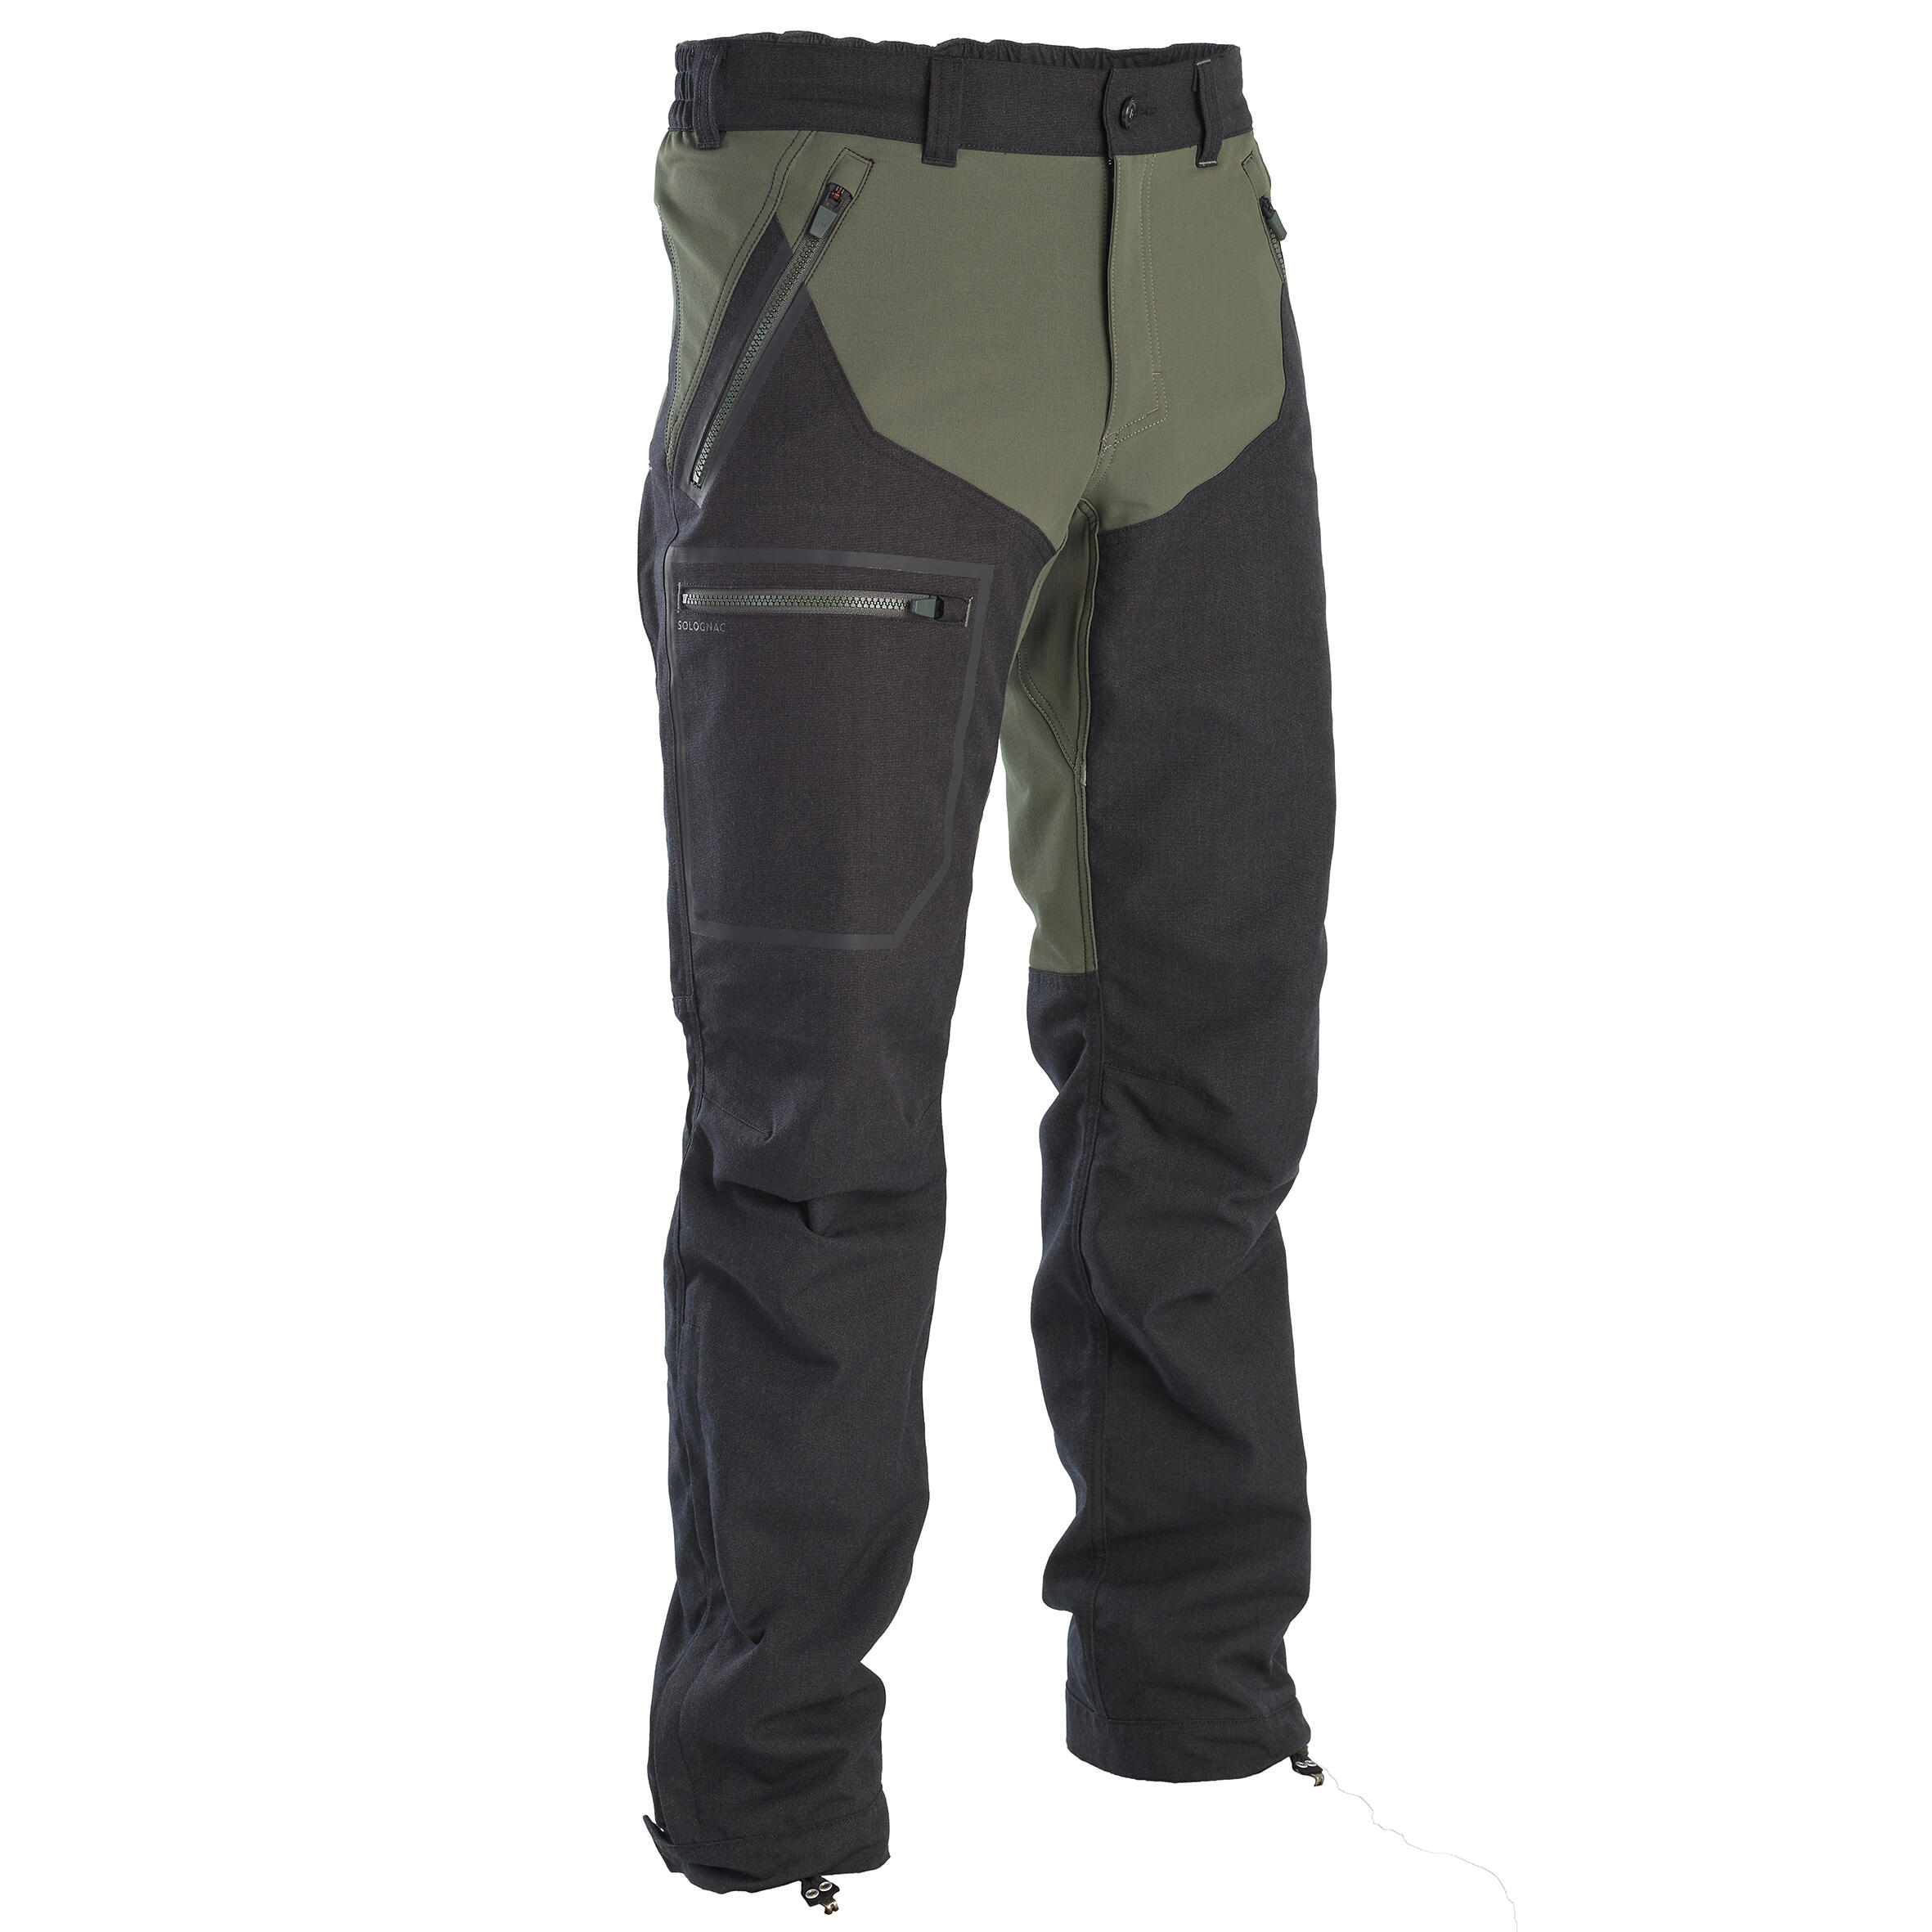 Steppe 300 Hunting Trousers - Green Island Camouflage | Fitness Mania |  Hunting pants, Dark khaki, Pants